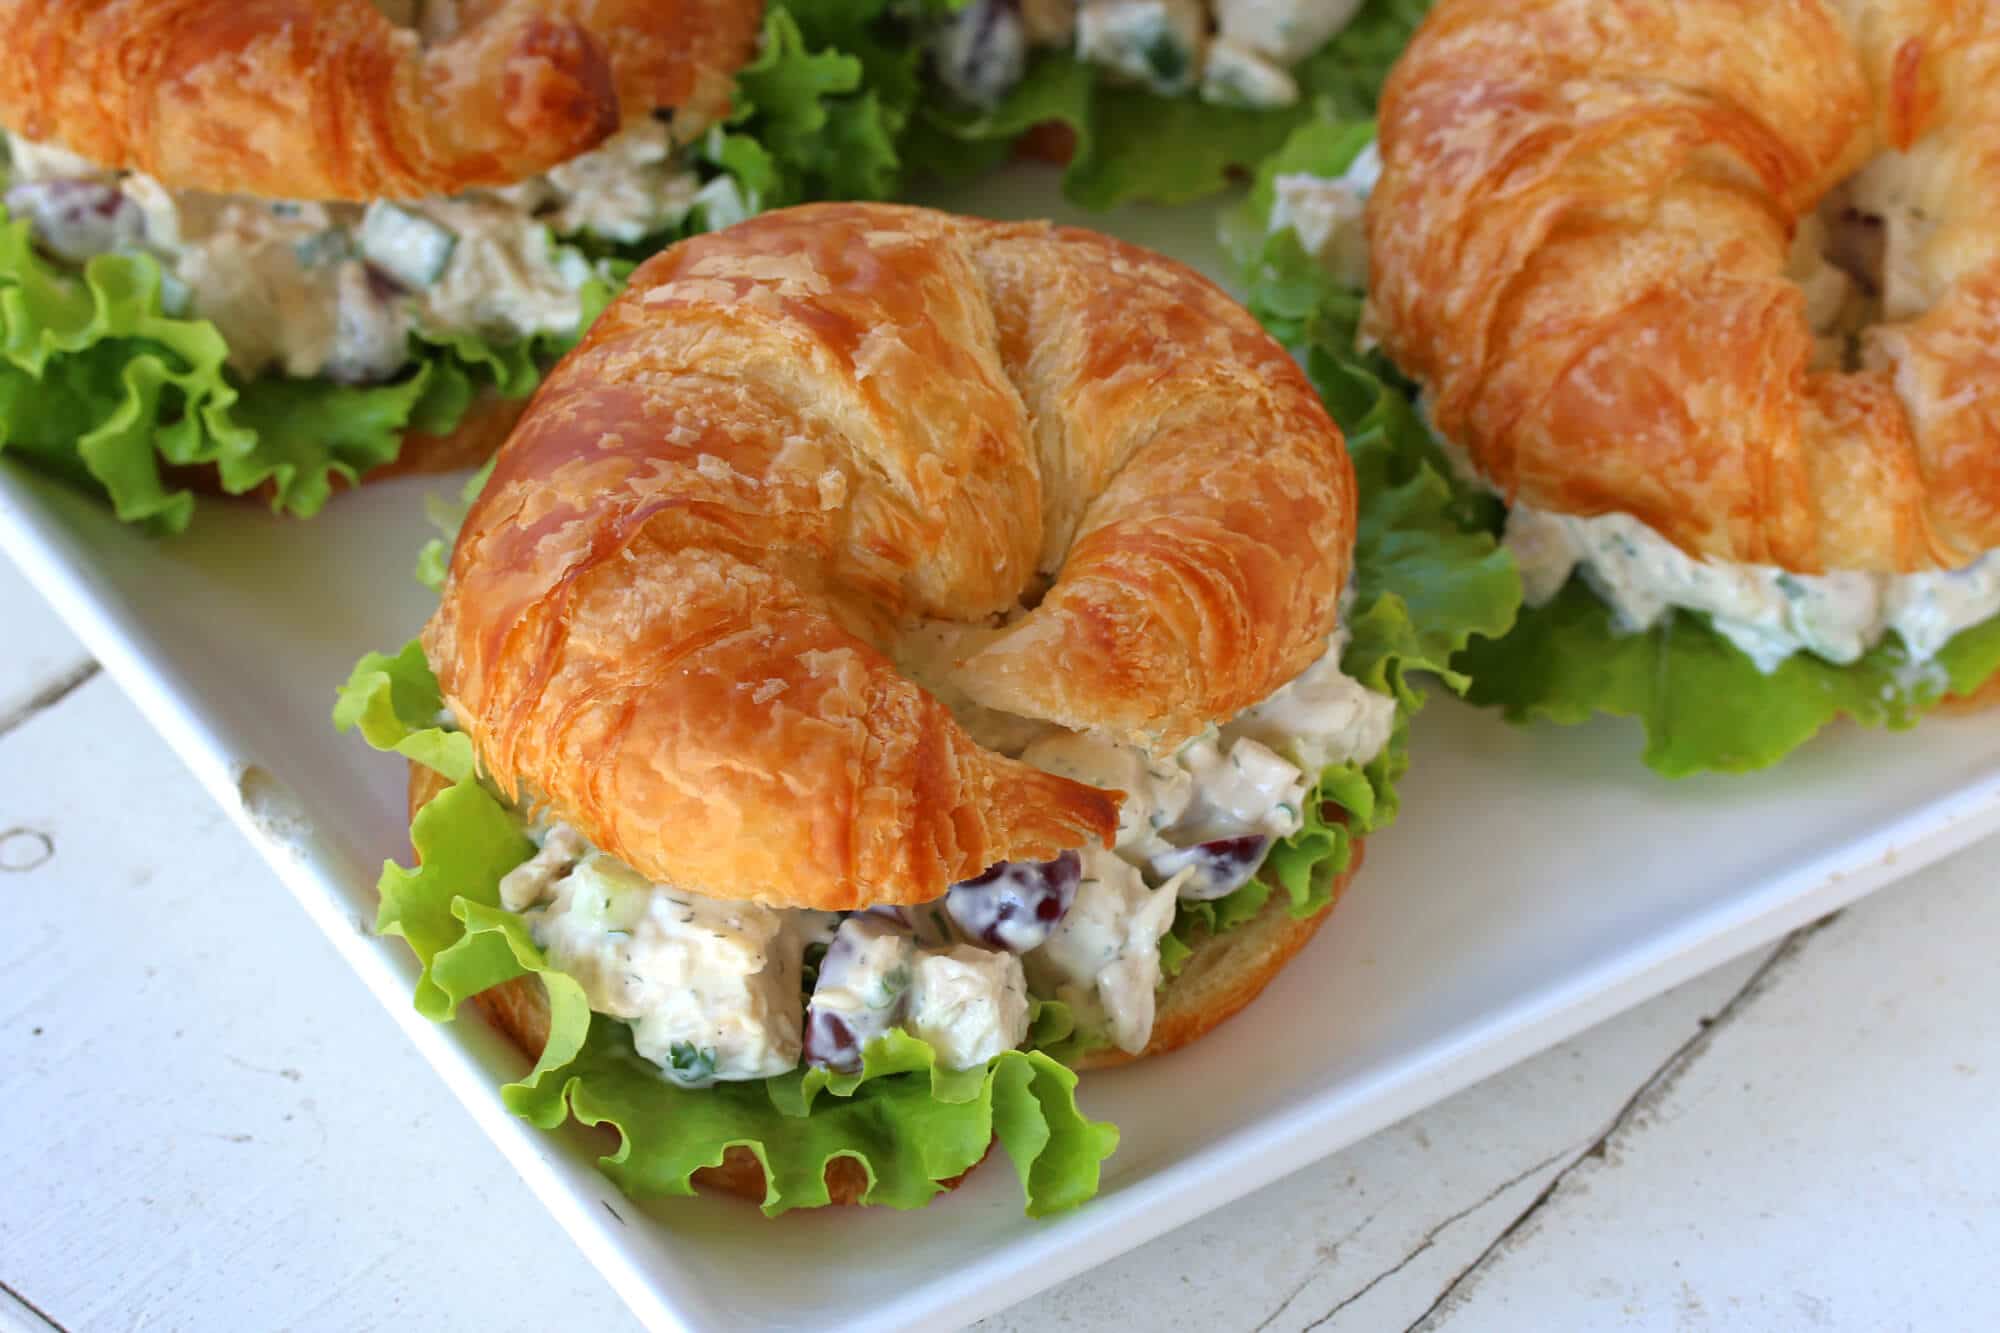 chicken salad recipe best homemade ultimate deli style croissants sandwiches 